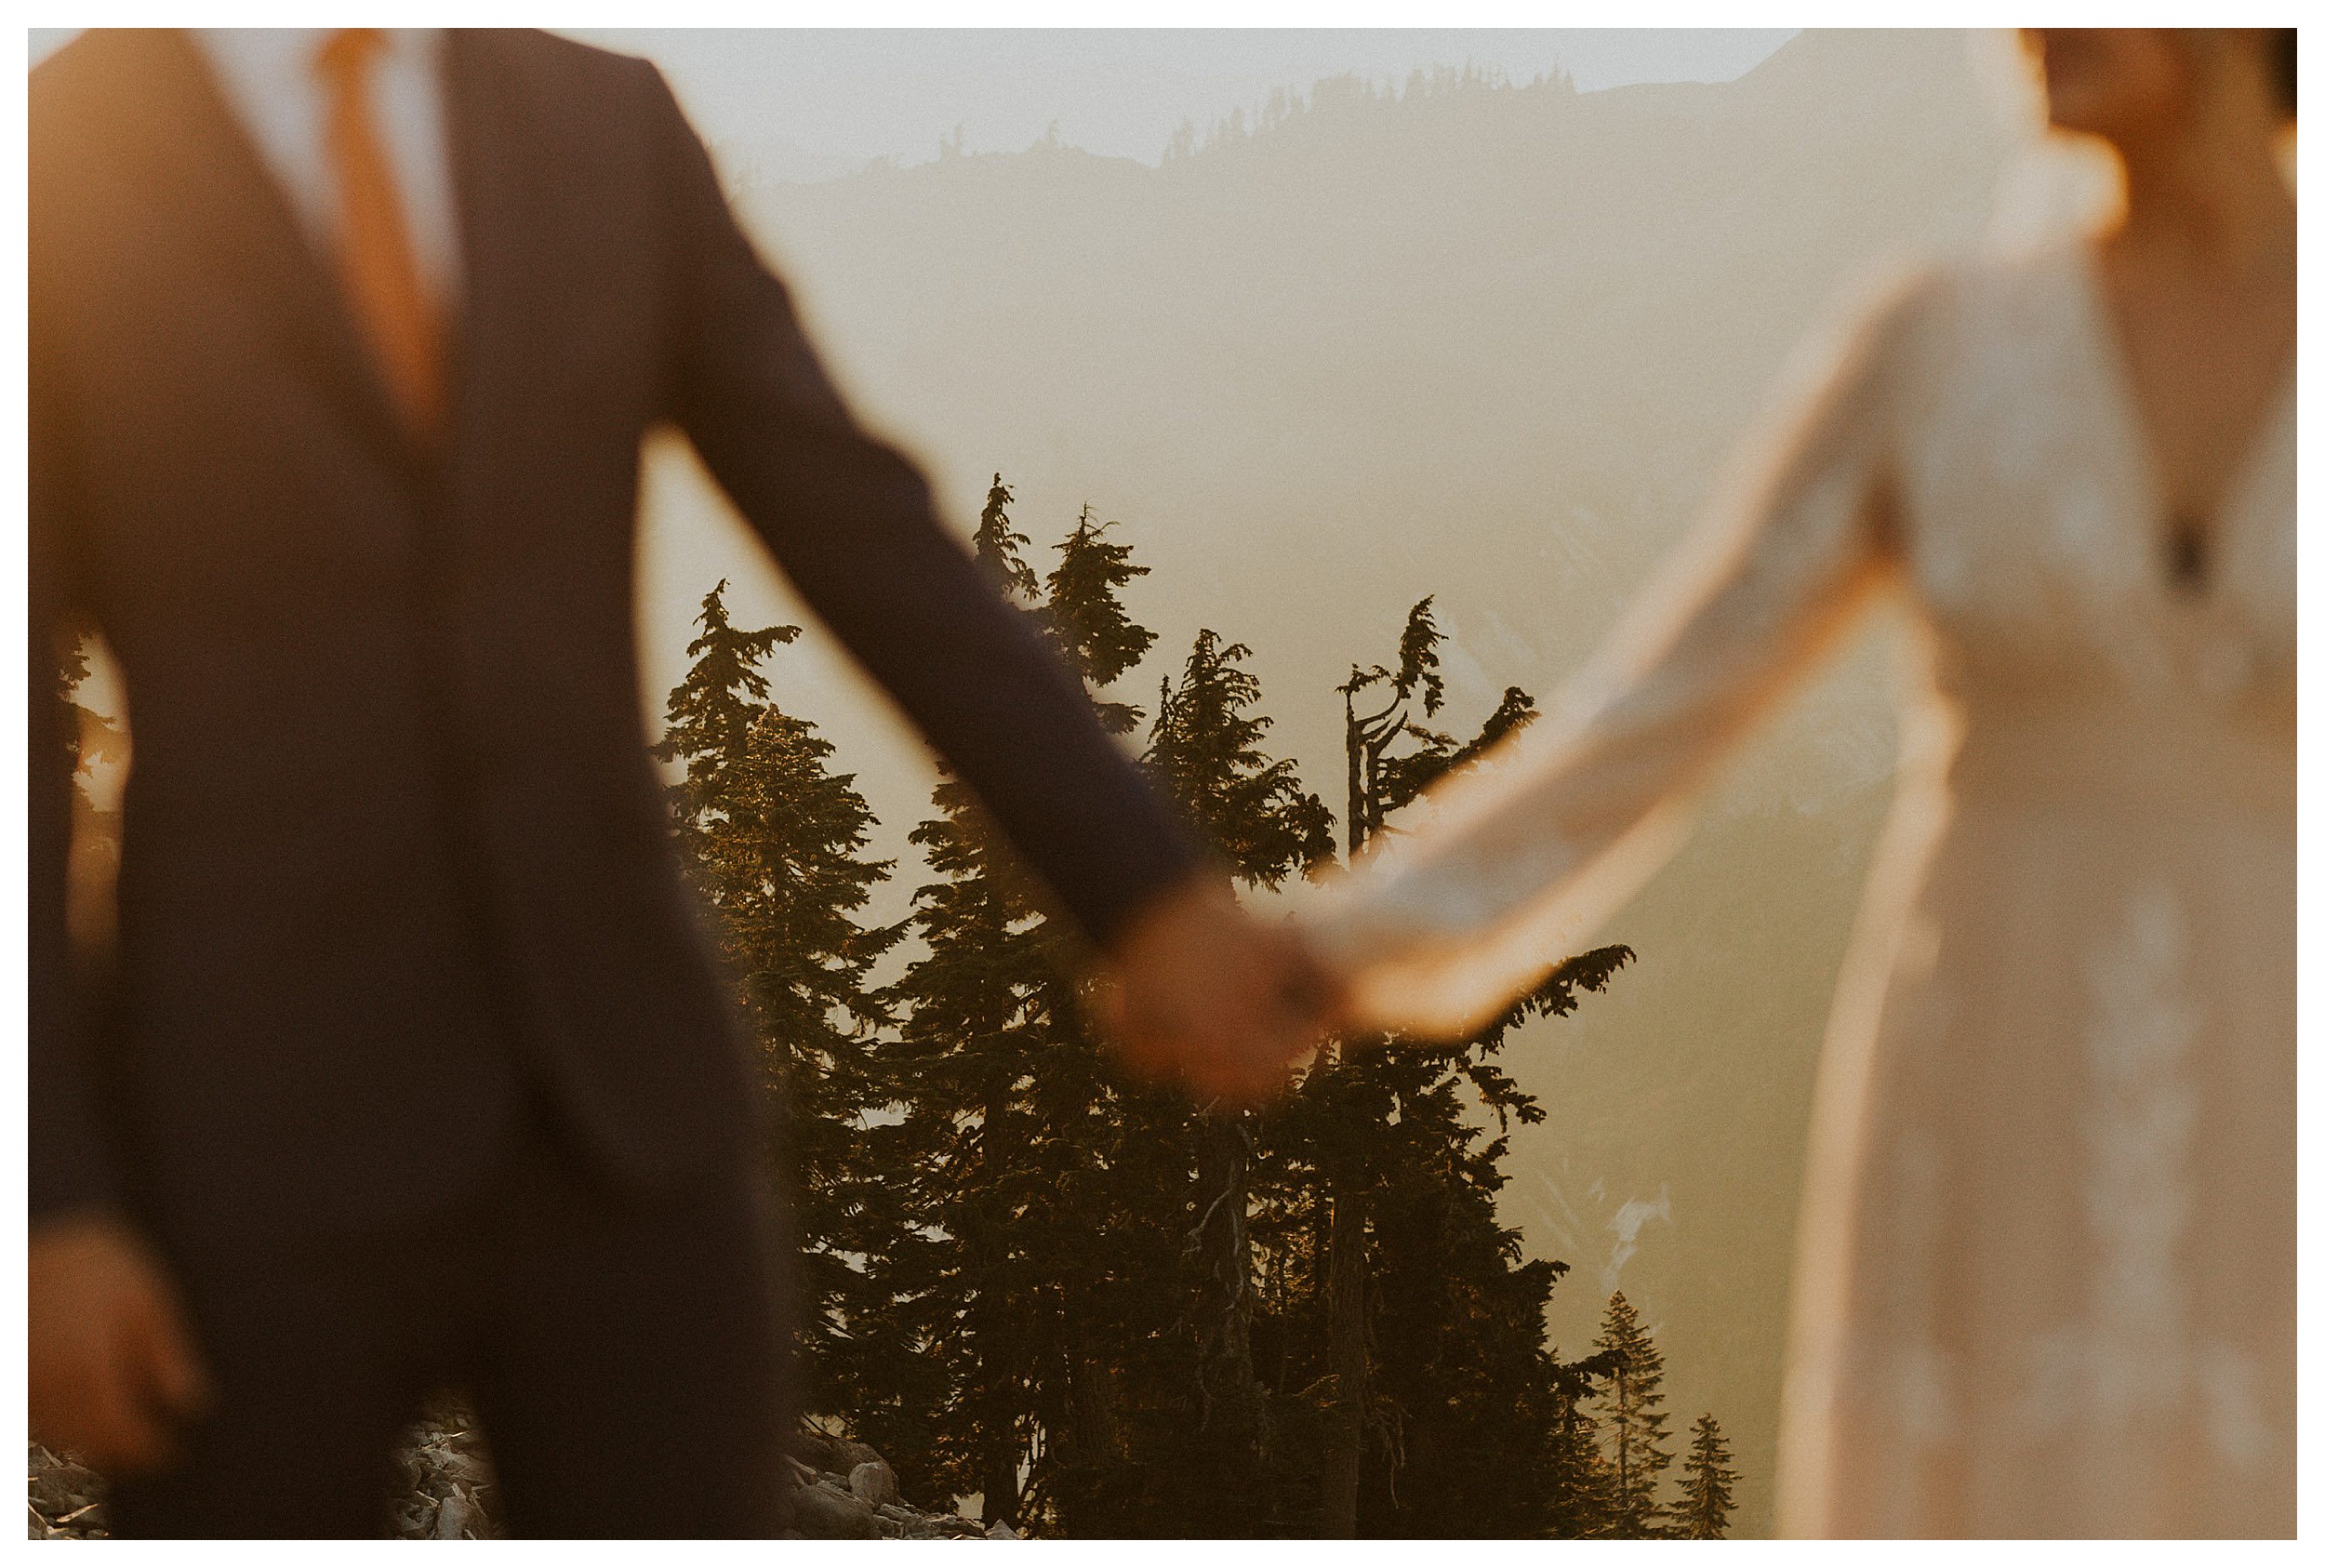 bride and groom holding hands artist point landscape

